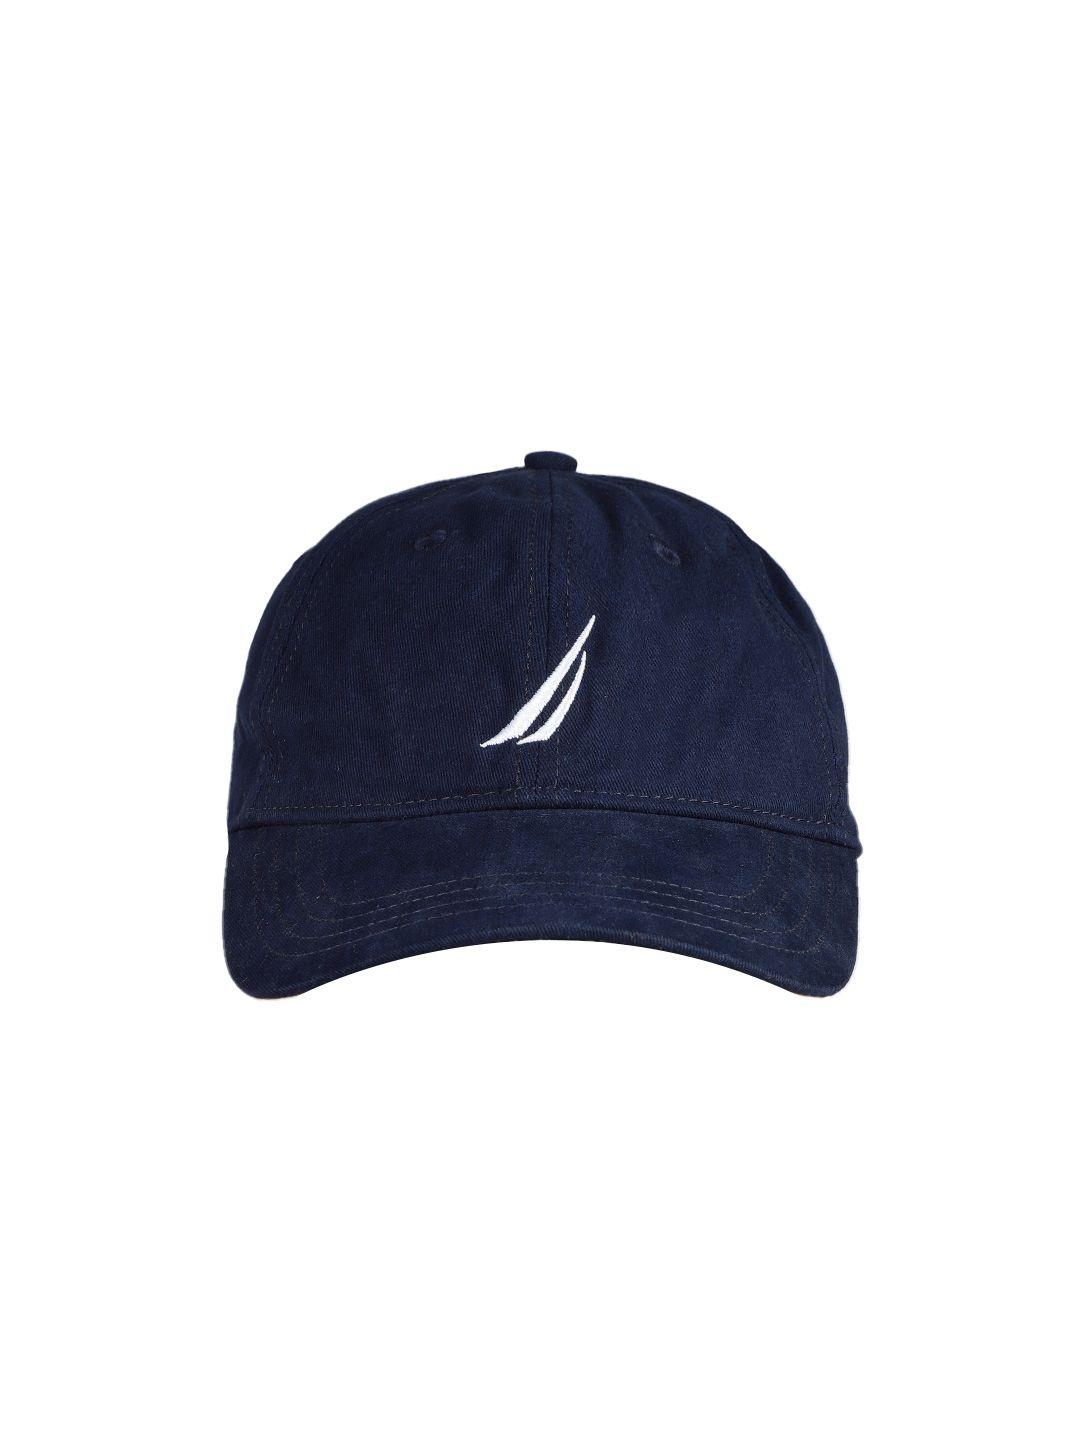 nautica men brand logo embroidered baseball cap